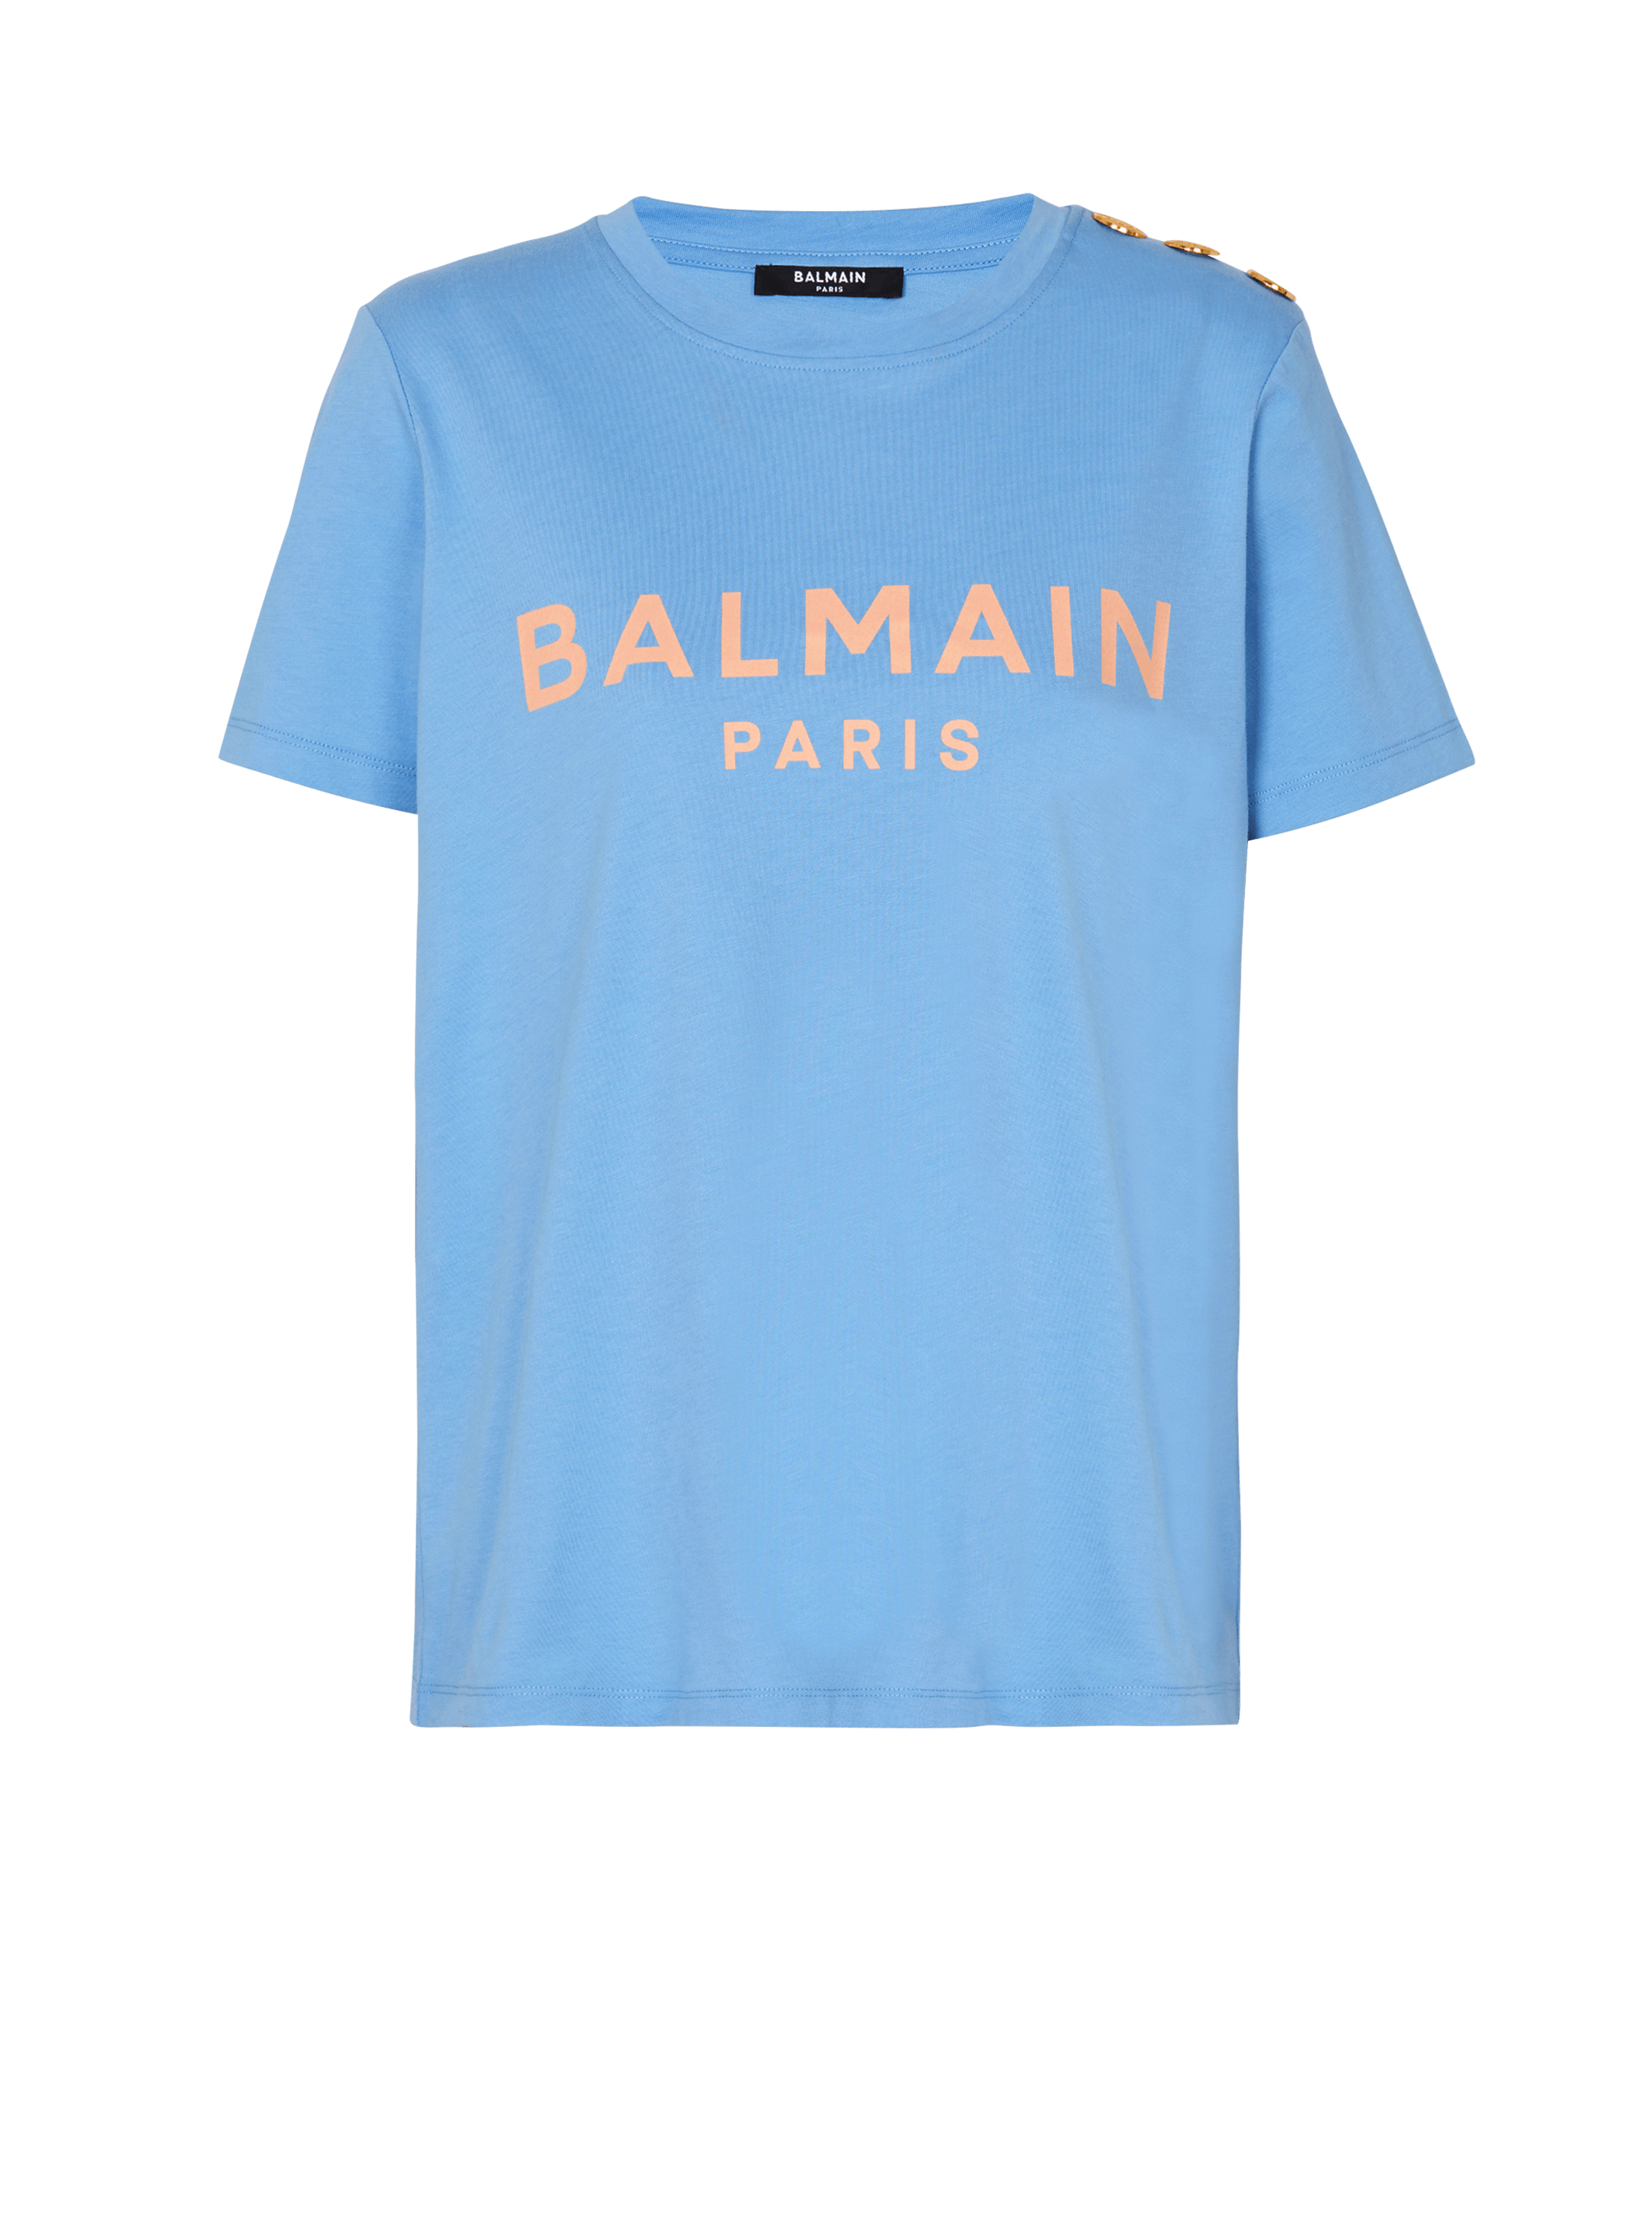 Balmain Paris 프린트 장식 티셔츠